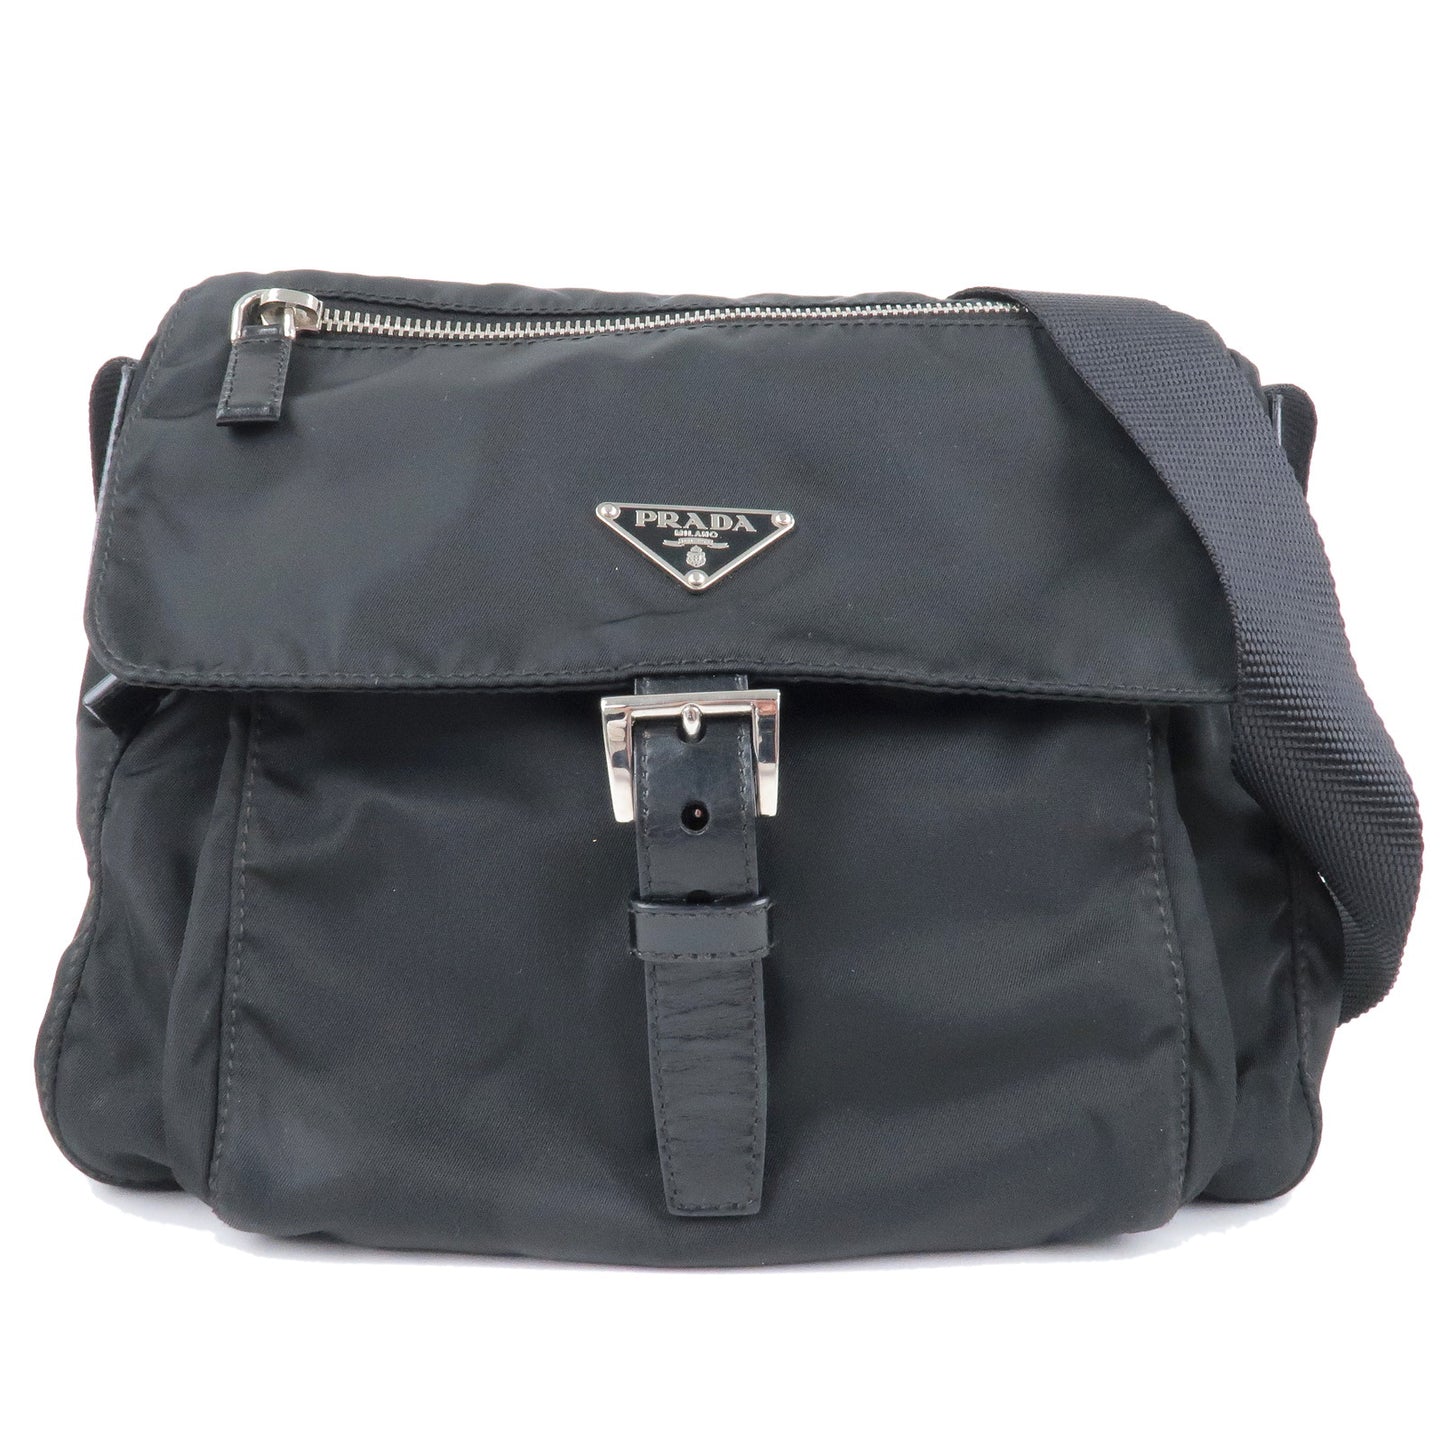 PRADA-Logo-Nylon-Leather-Shoulder-Bag-NERO-Black-BT8994